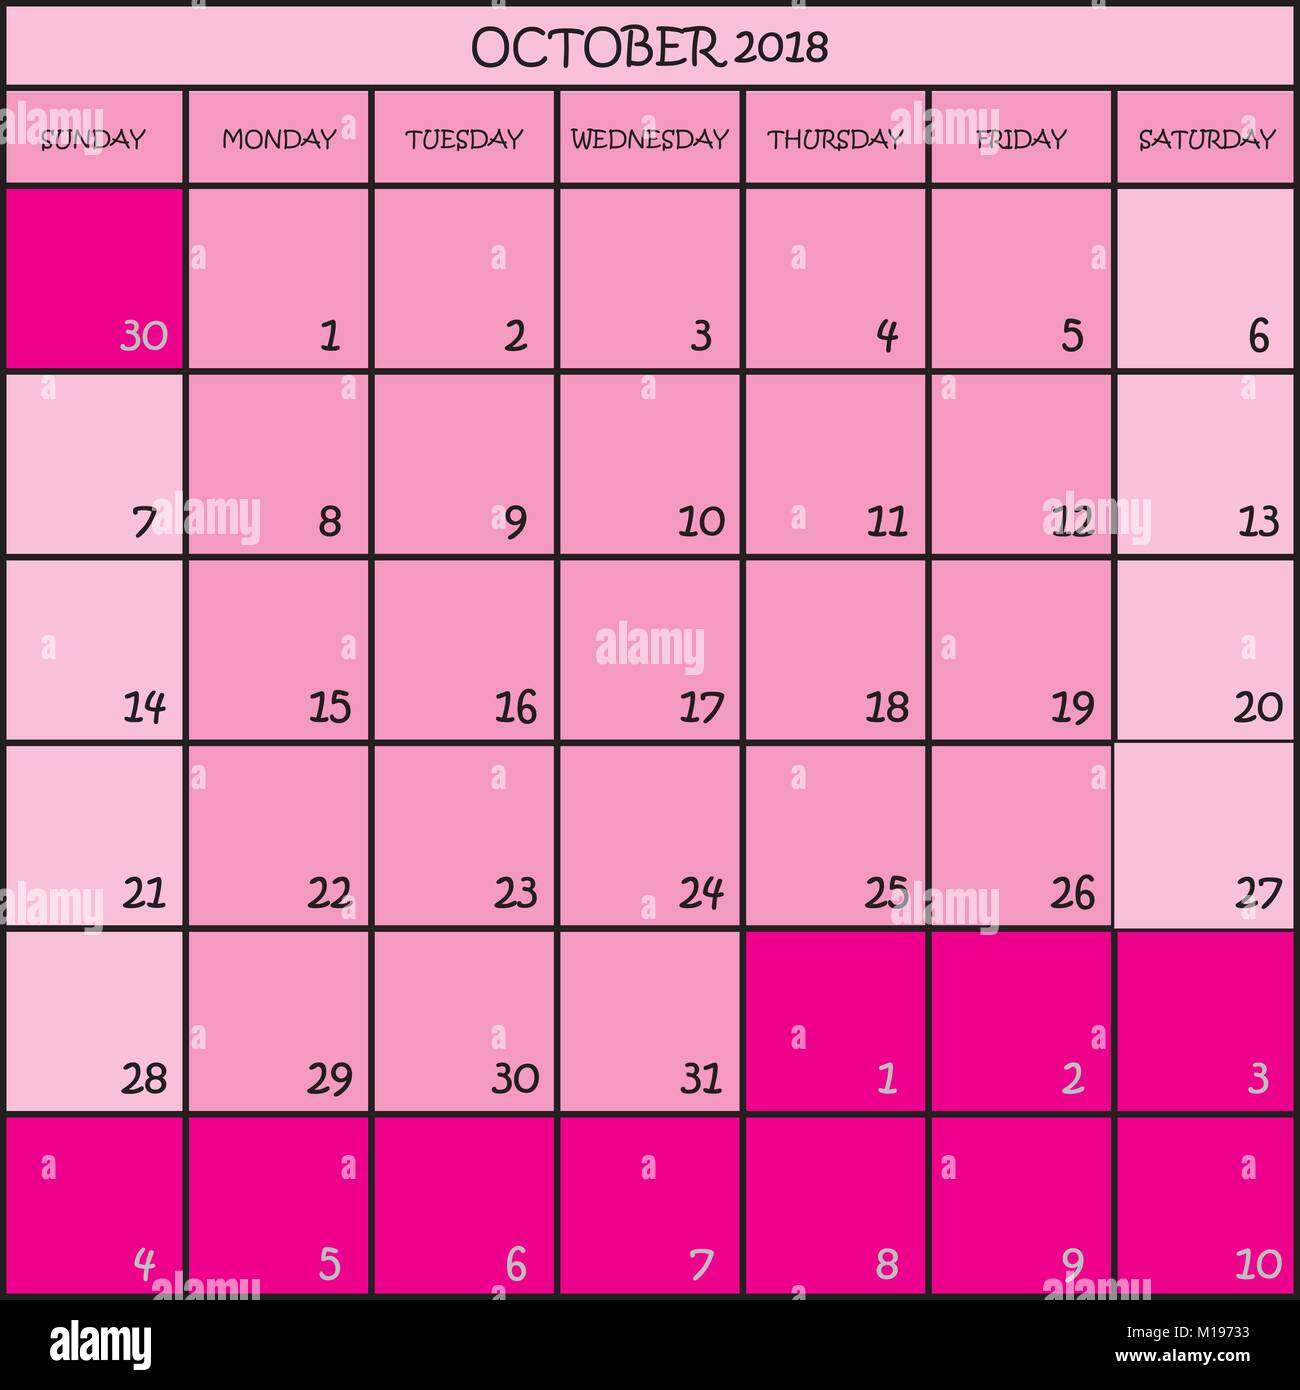 calendar-planner-october-2018-on-transparent-background-stock-vector